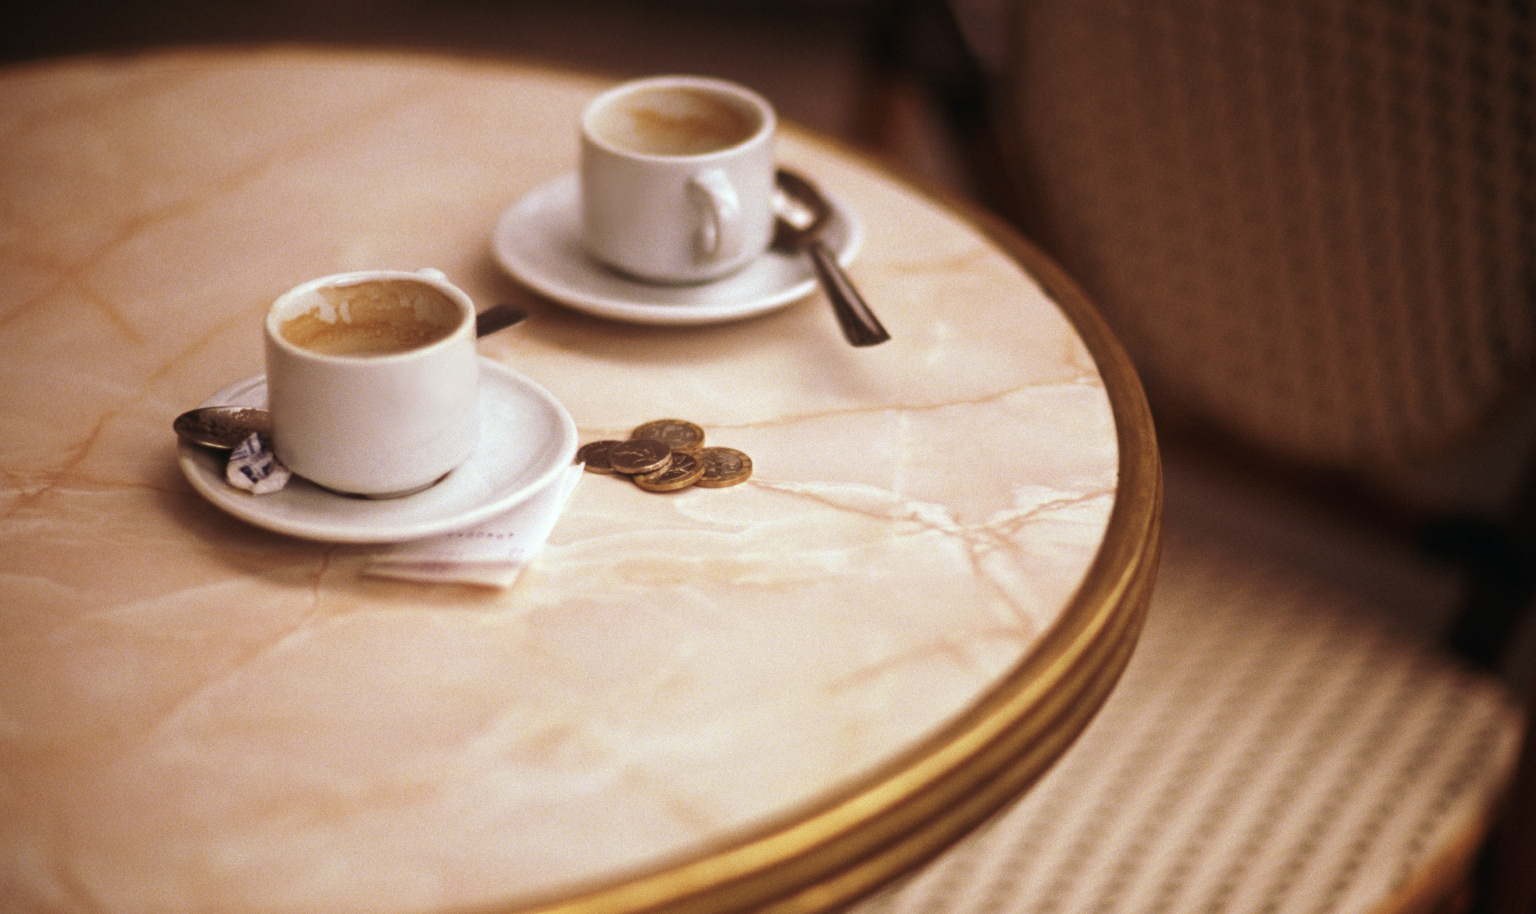 There is coffee in the cup. Чашка кофе. Чашка "на стол". Столик для кофе. Столик с чашечкой.